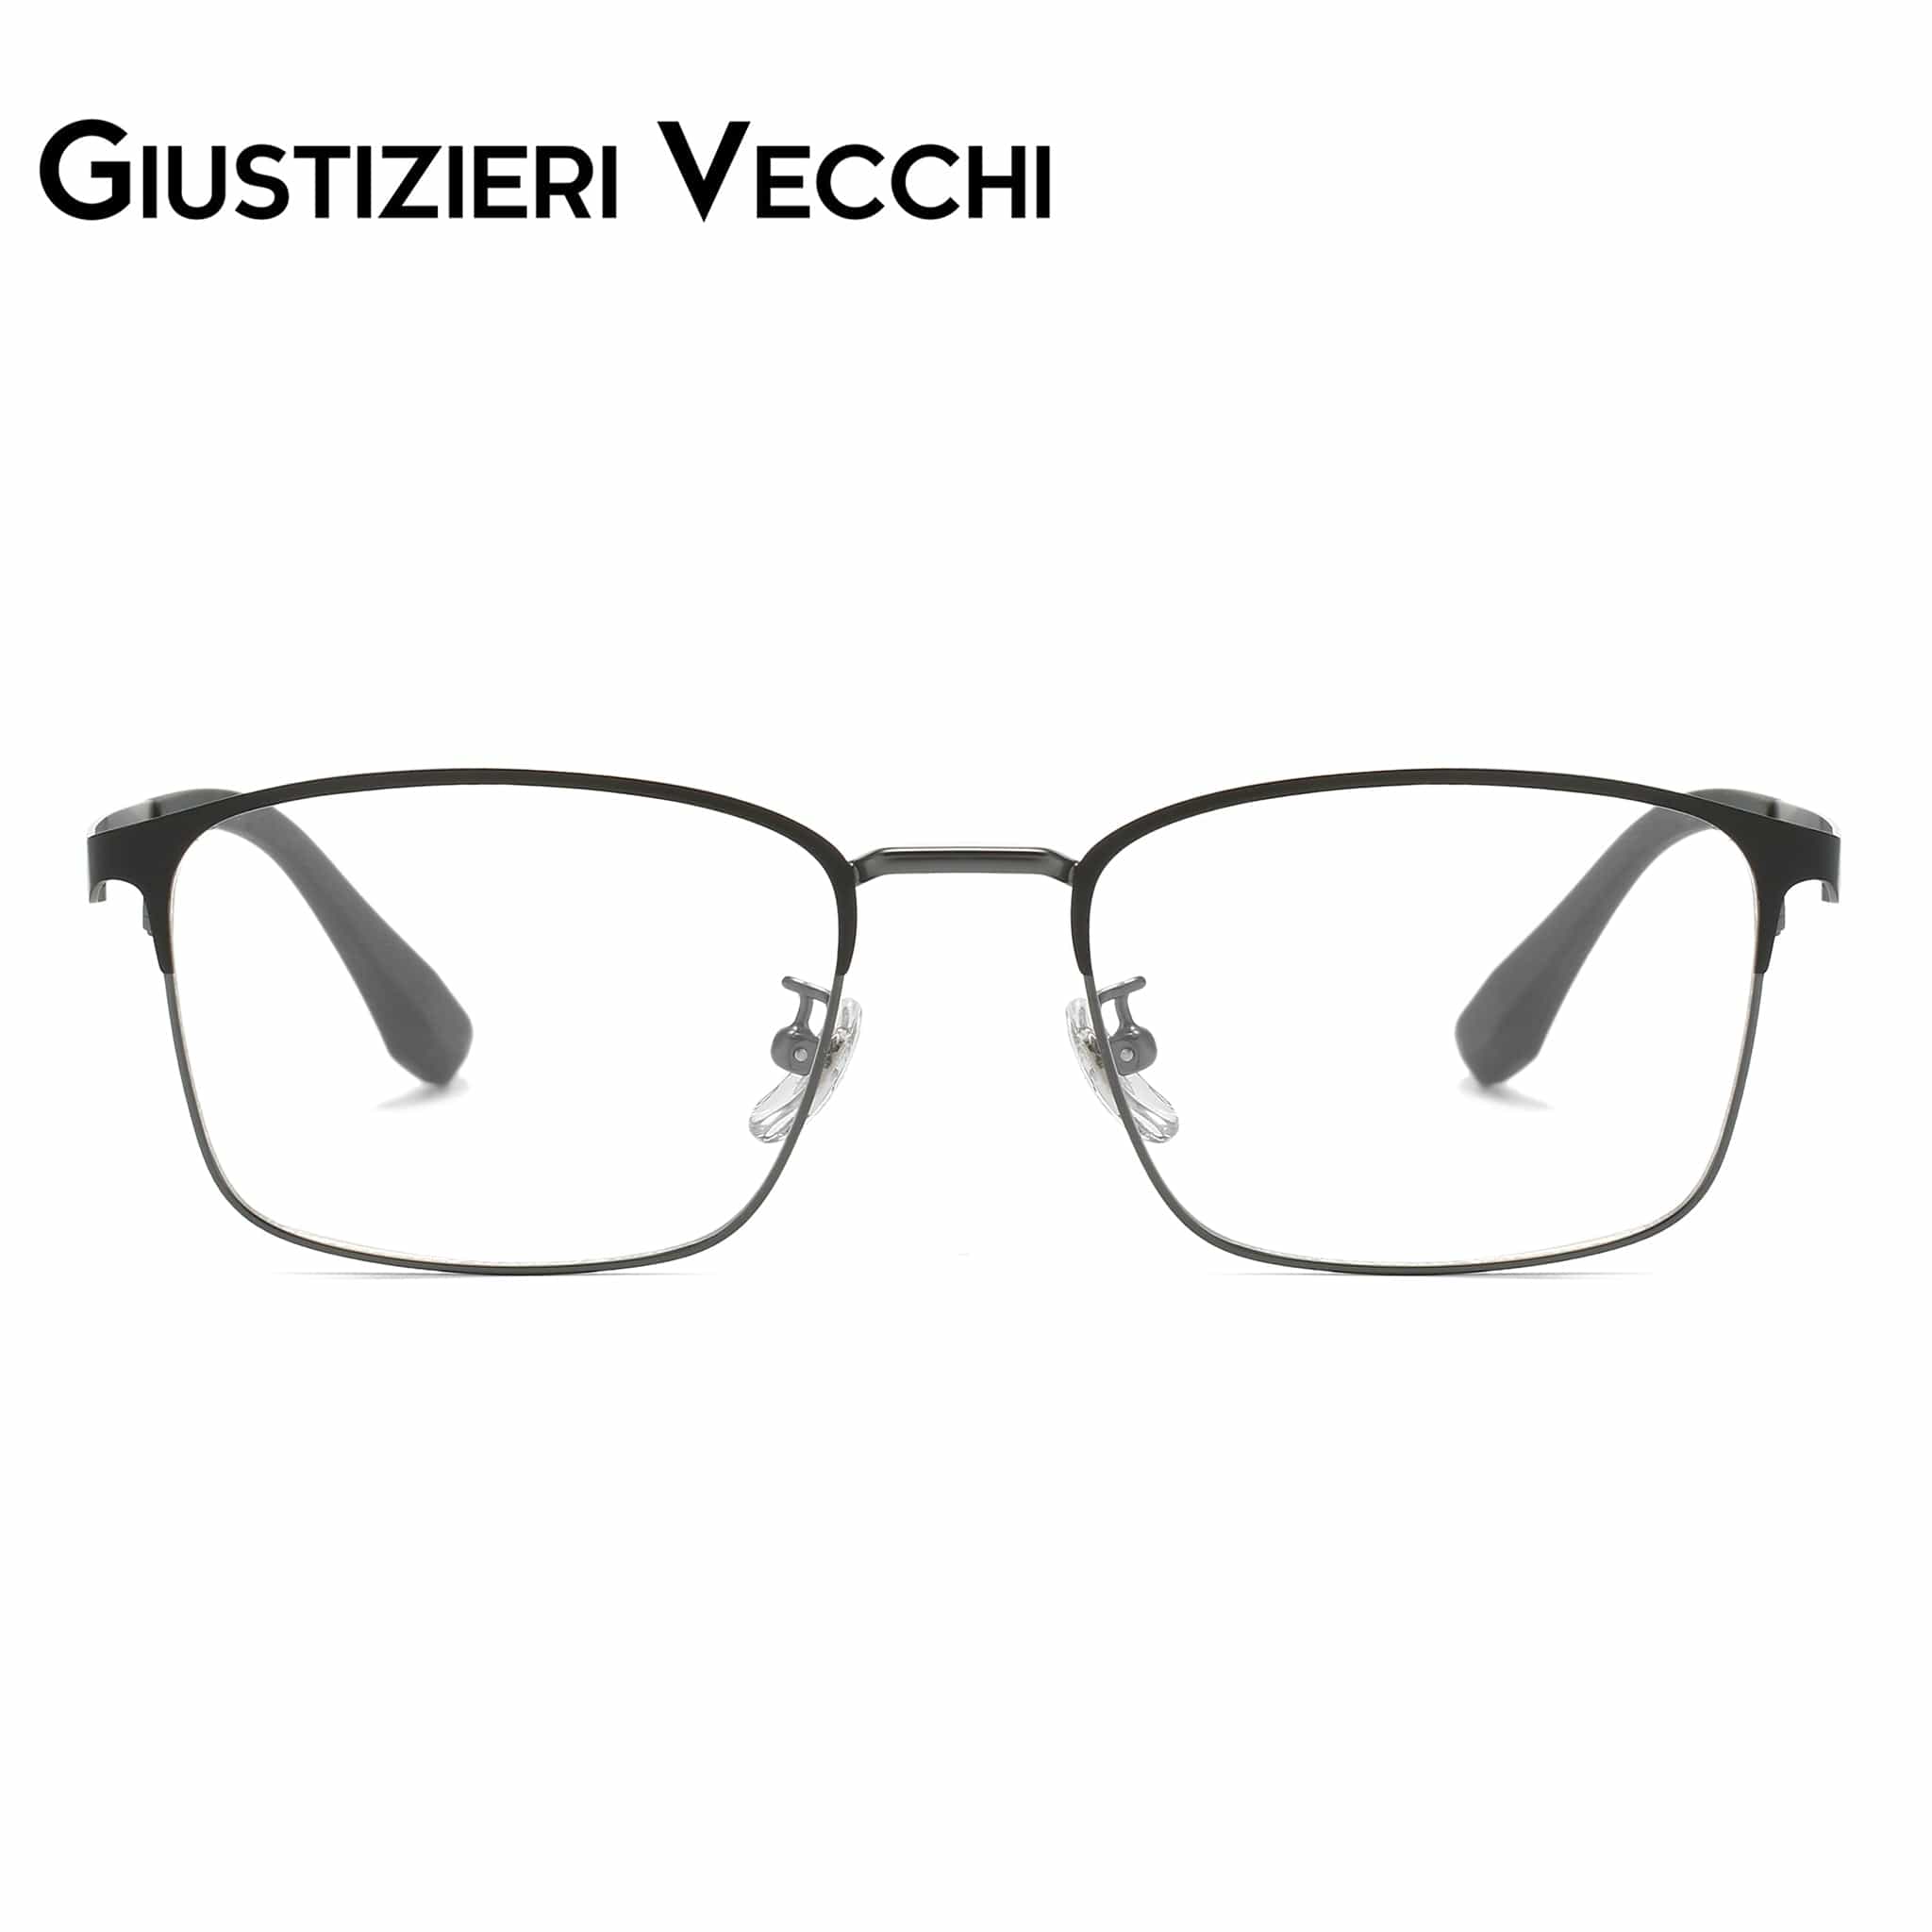 GIUSTIZIERI VECCHI Eyeglasses Brushed Gunmatal / Medium Firestorm Uno